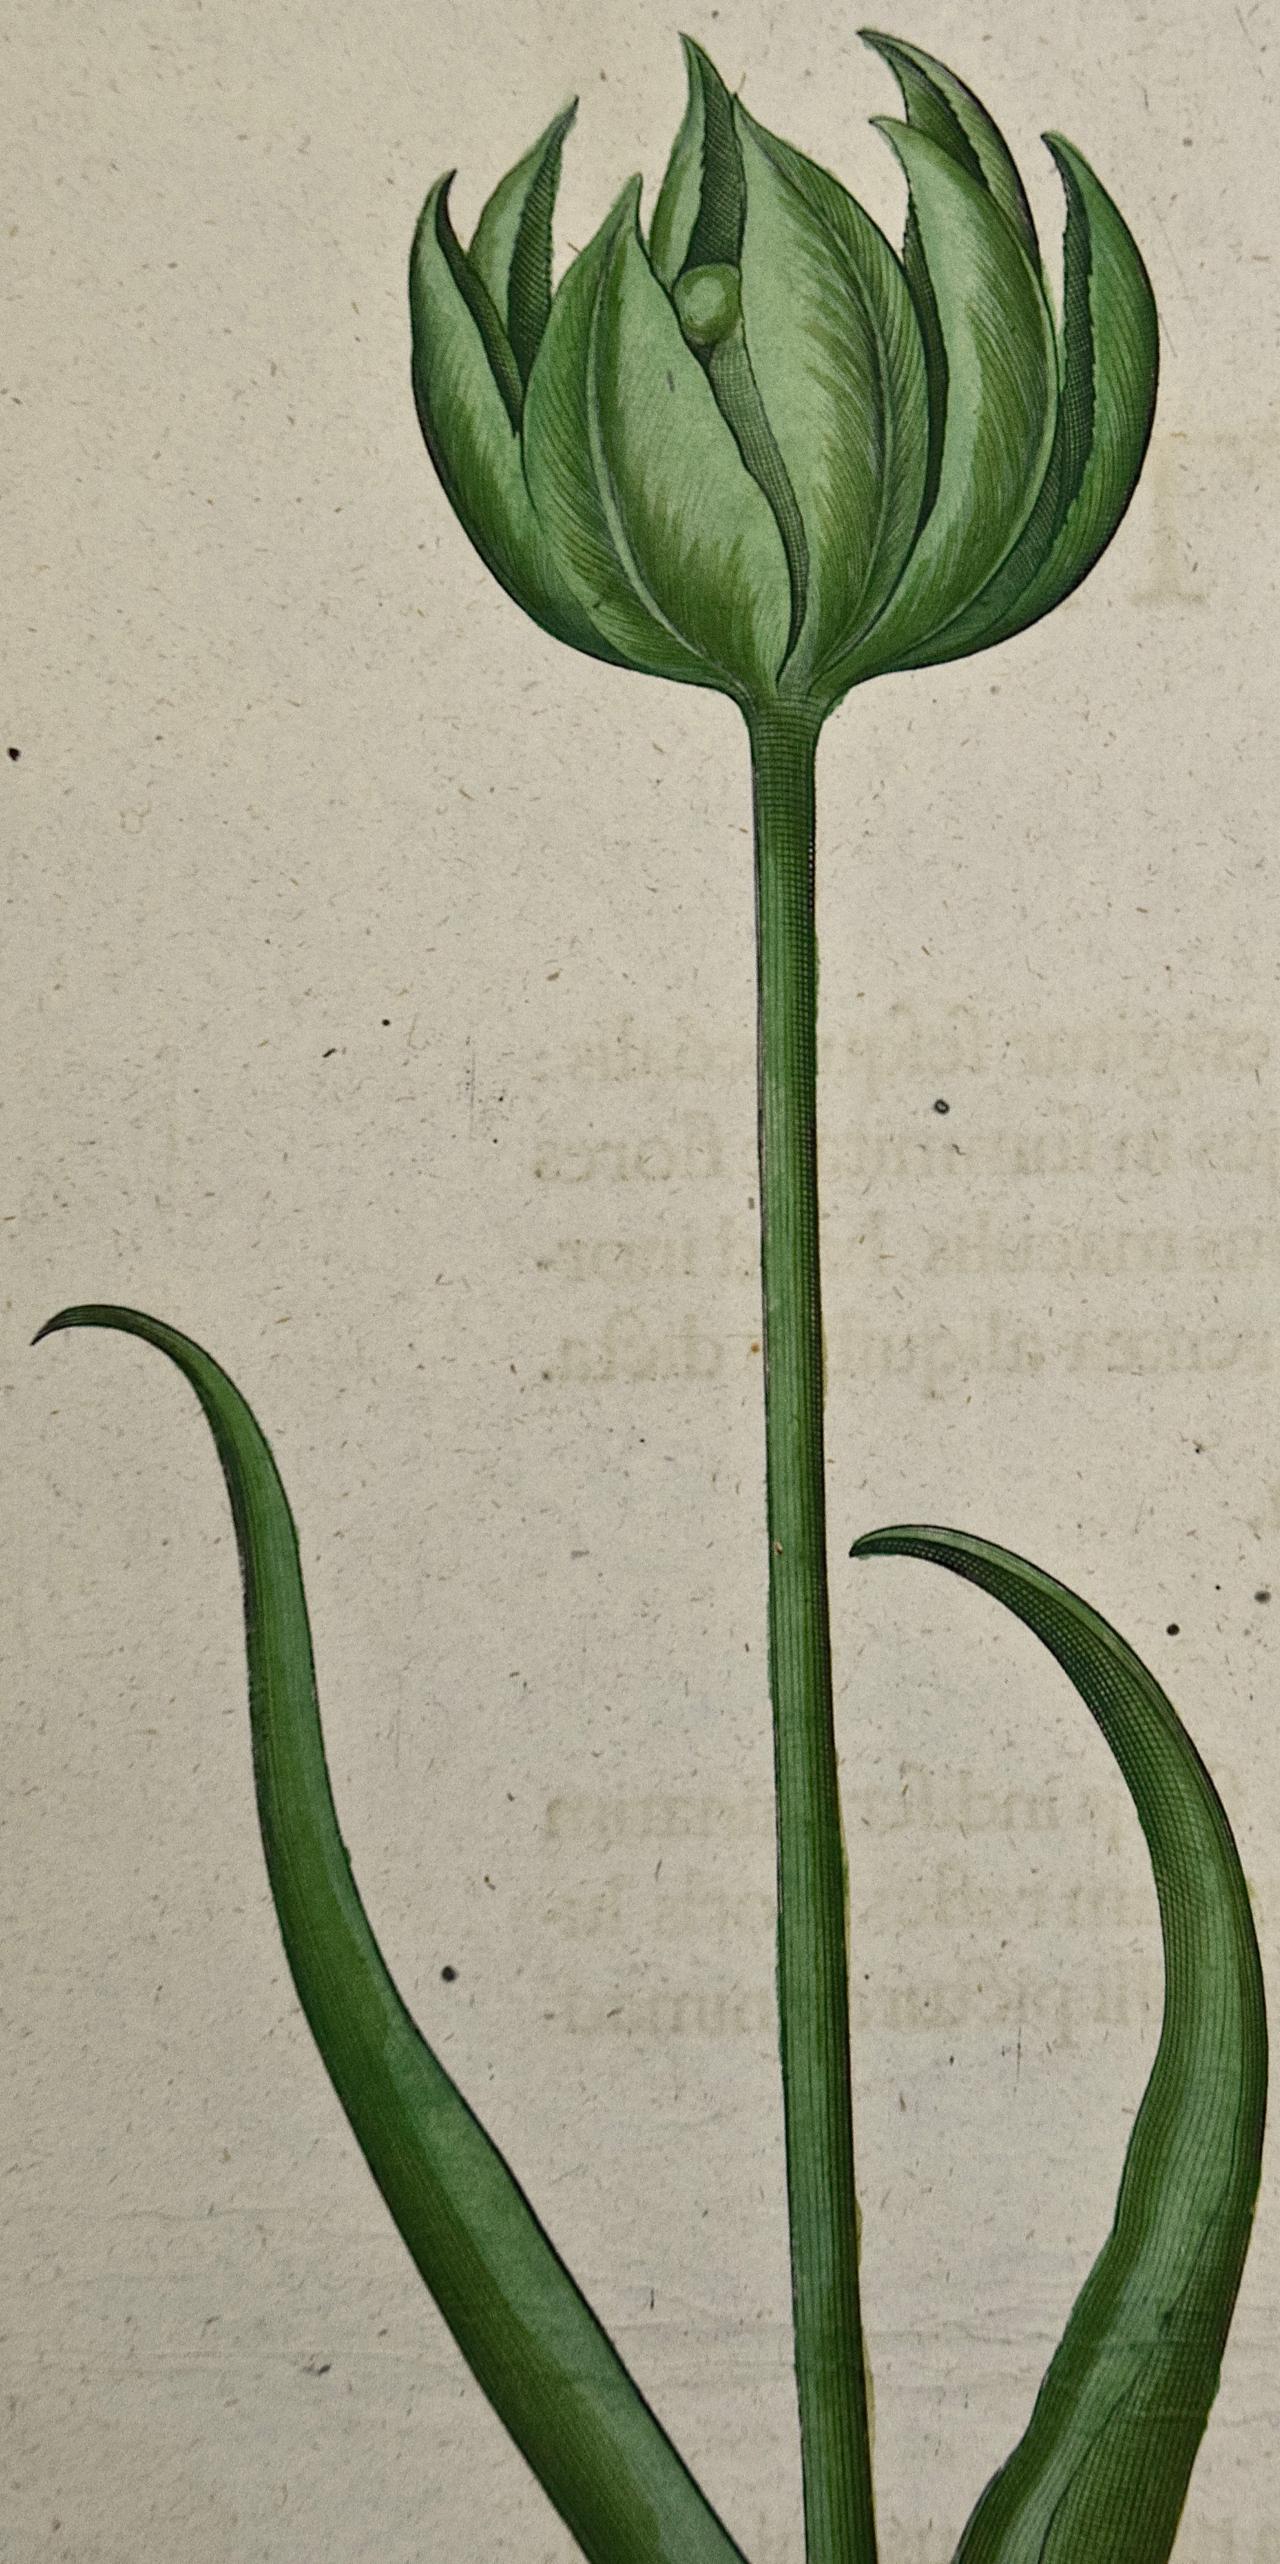 Besler Hand-colored Botanical Engraving of Flowering Tulip & Wild Garlic Plants  - Print by Basilius Besler